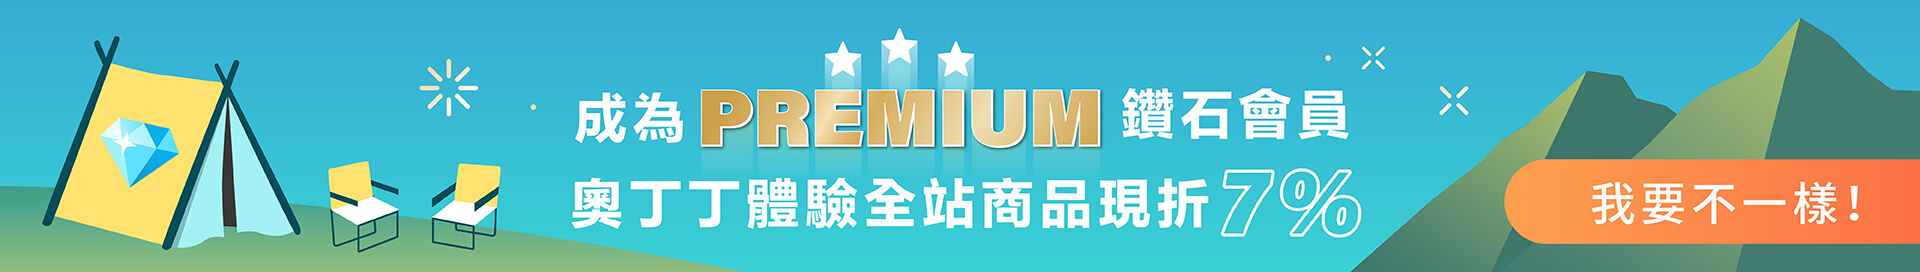 Premium2 萬用banner